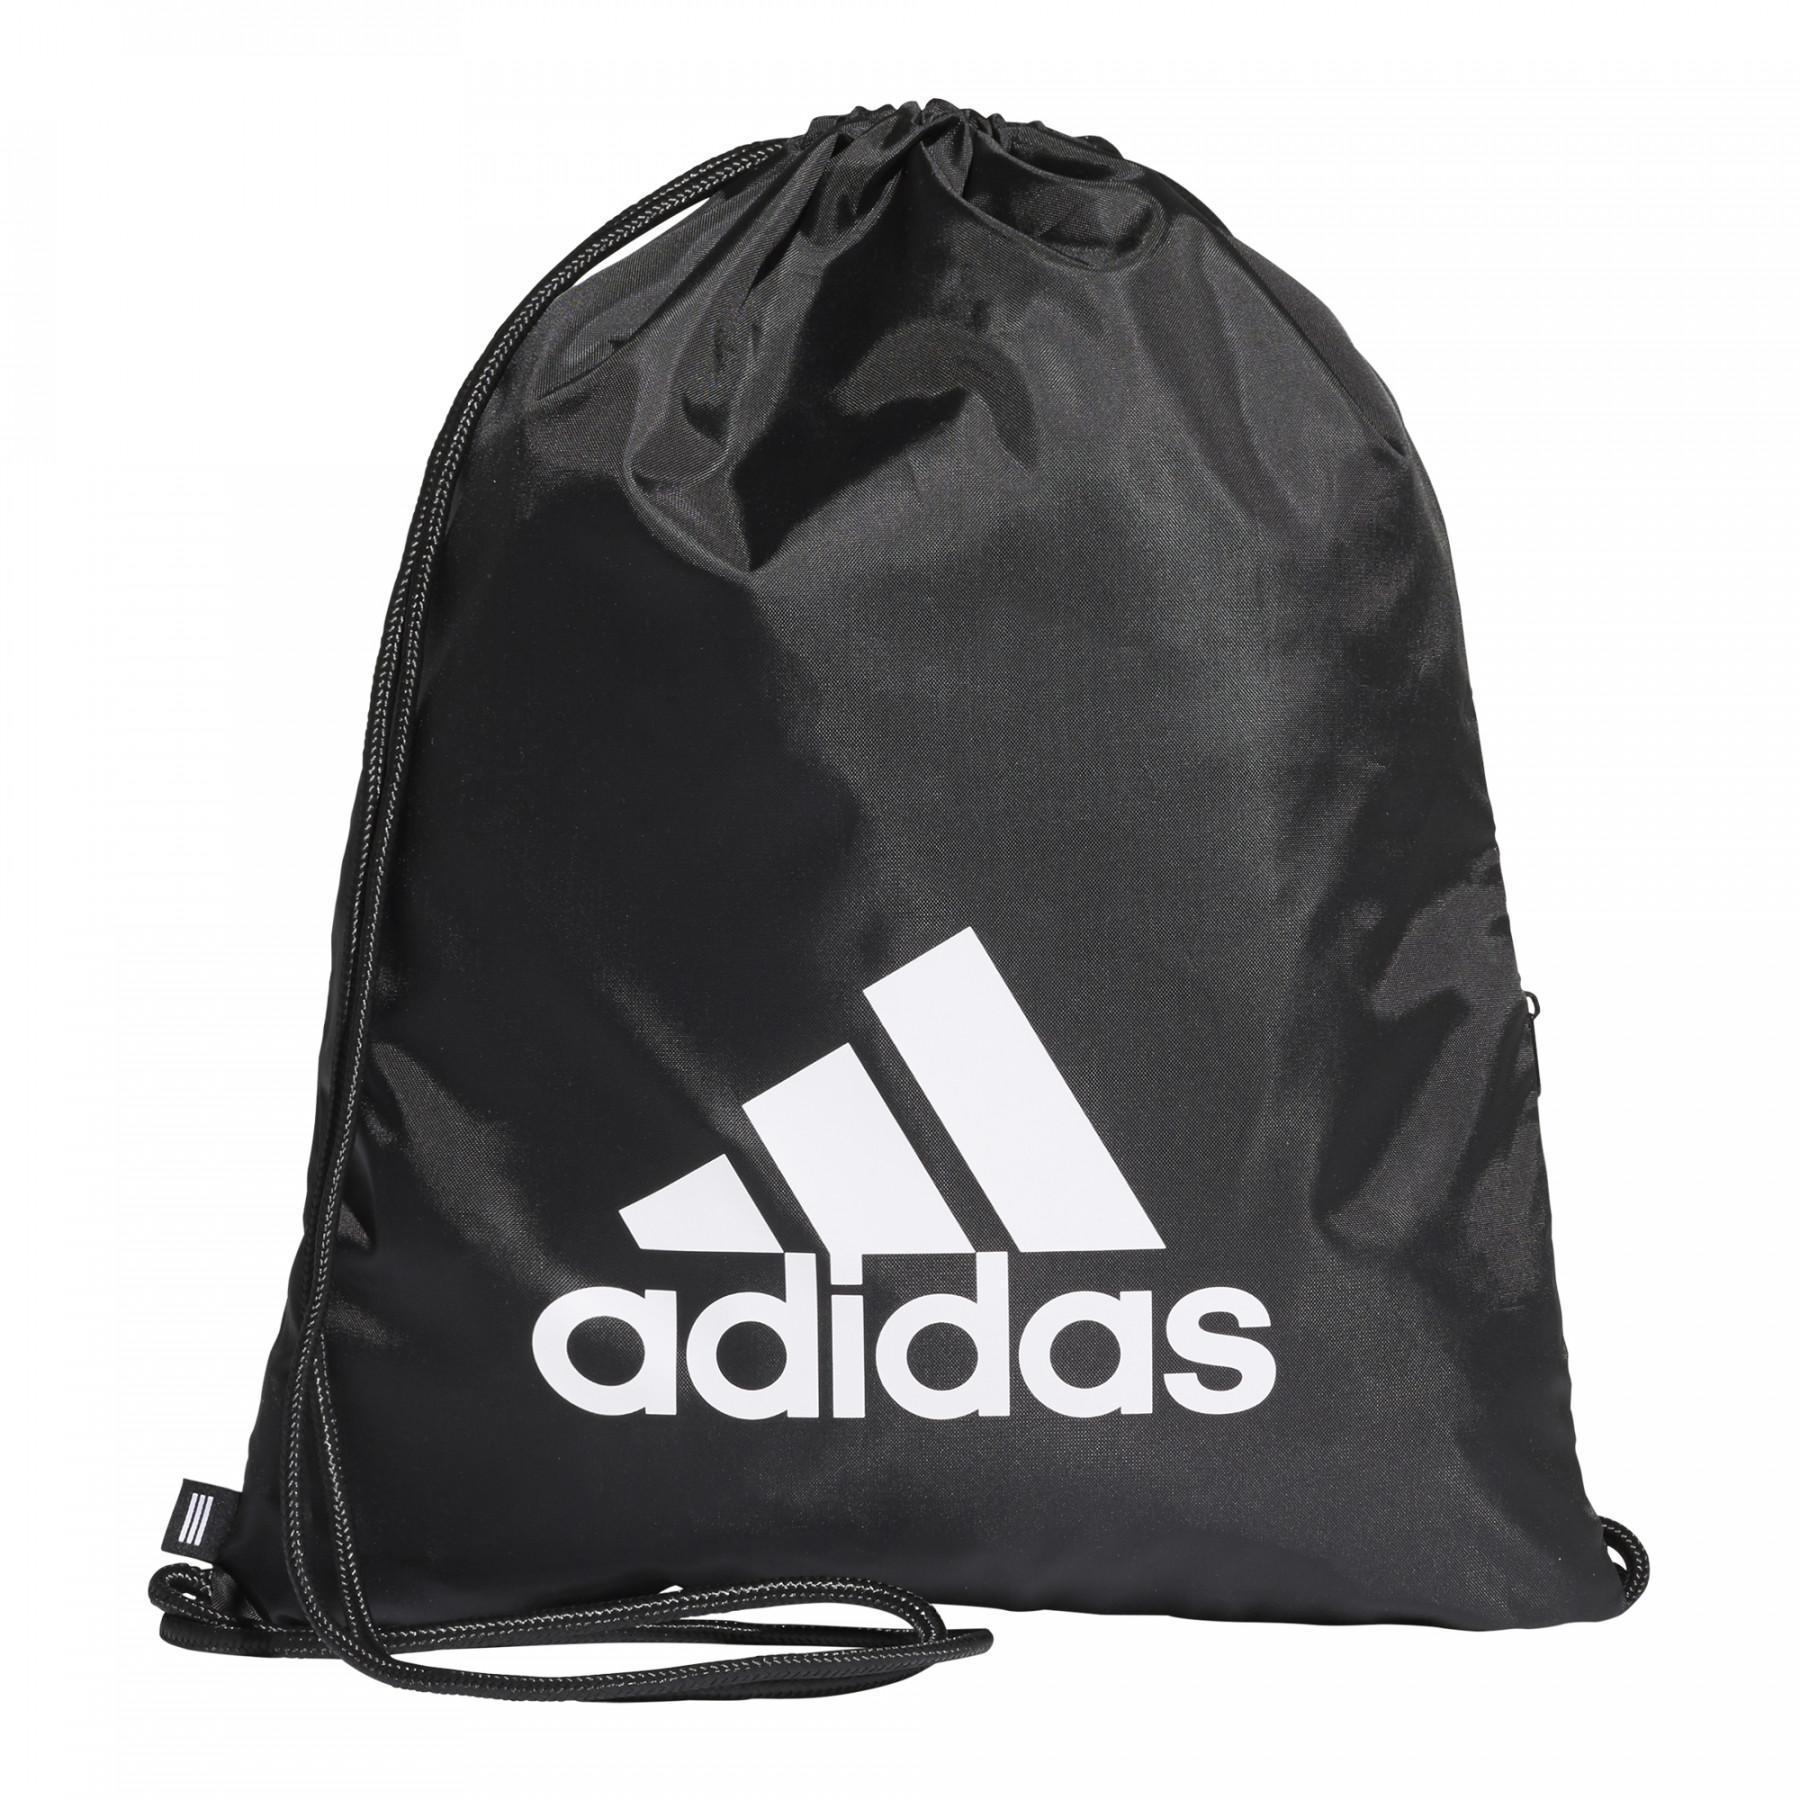 Sports bag adidas Tiro